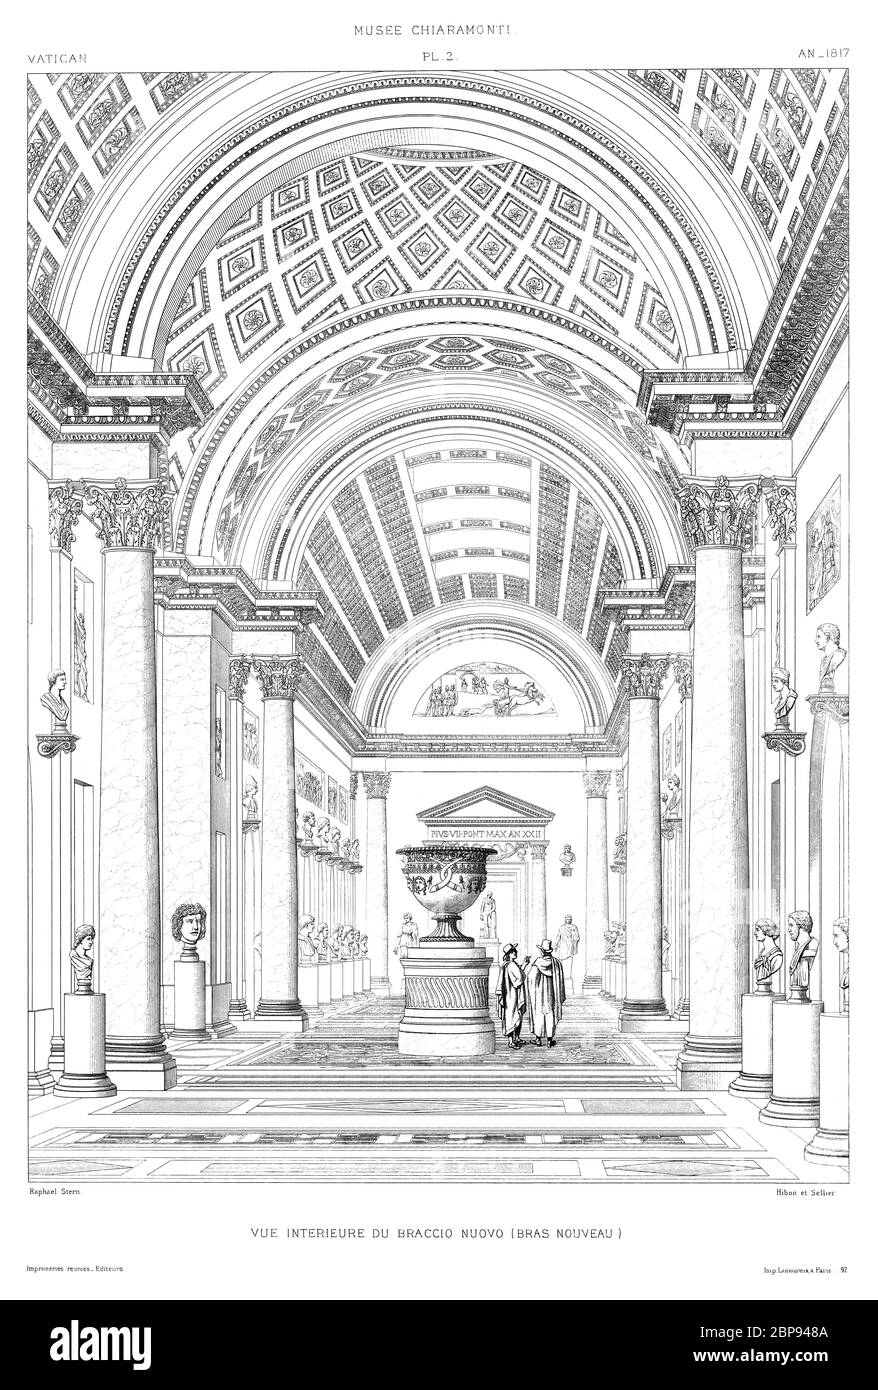 Rom, Vatikan: Chiaramonti Museum. Innenansicht von Braccio Nuovo 1817, aus dem Vatikan 1882. Stockfoto